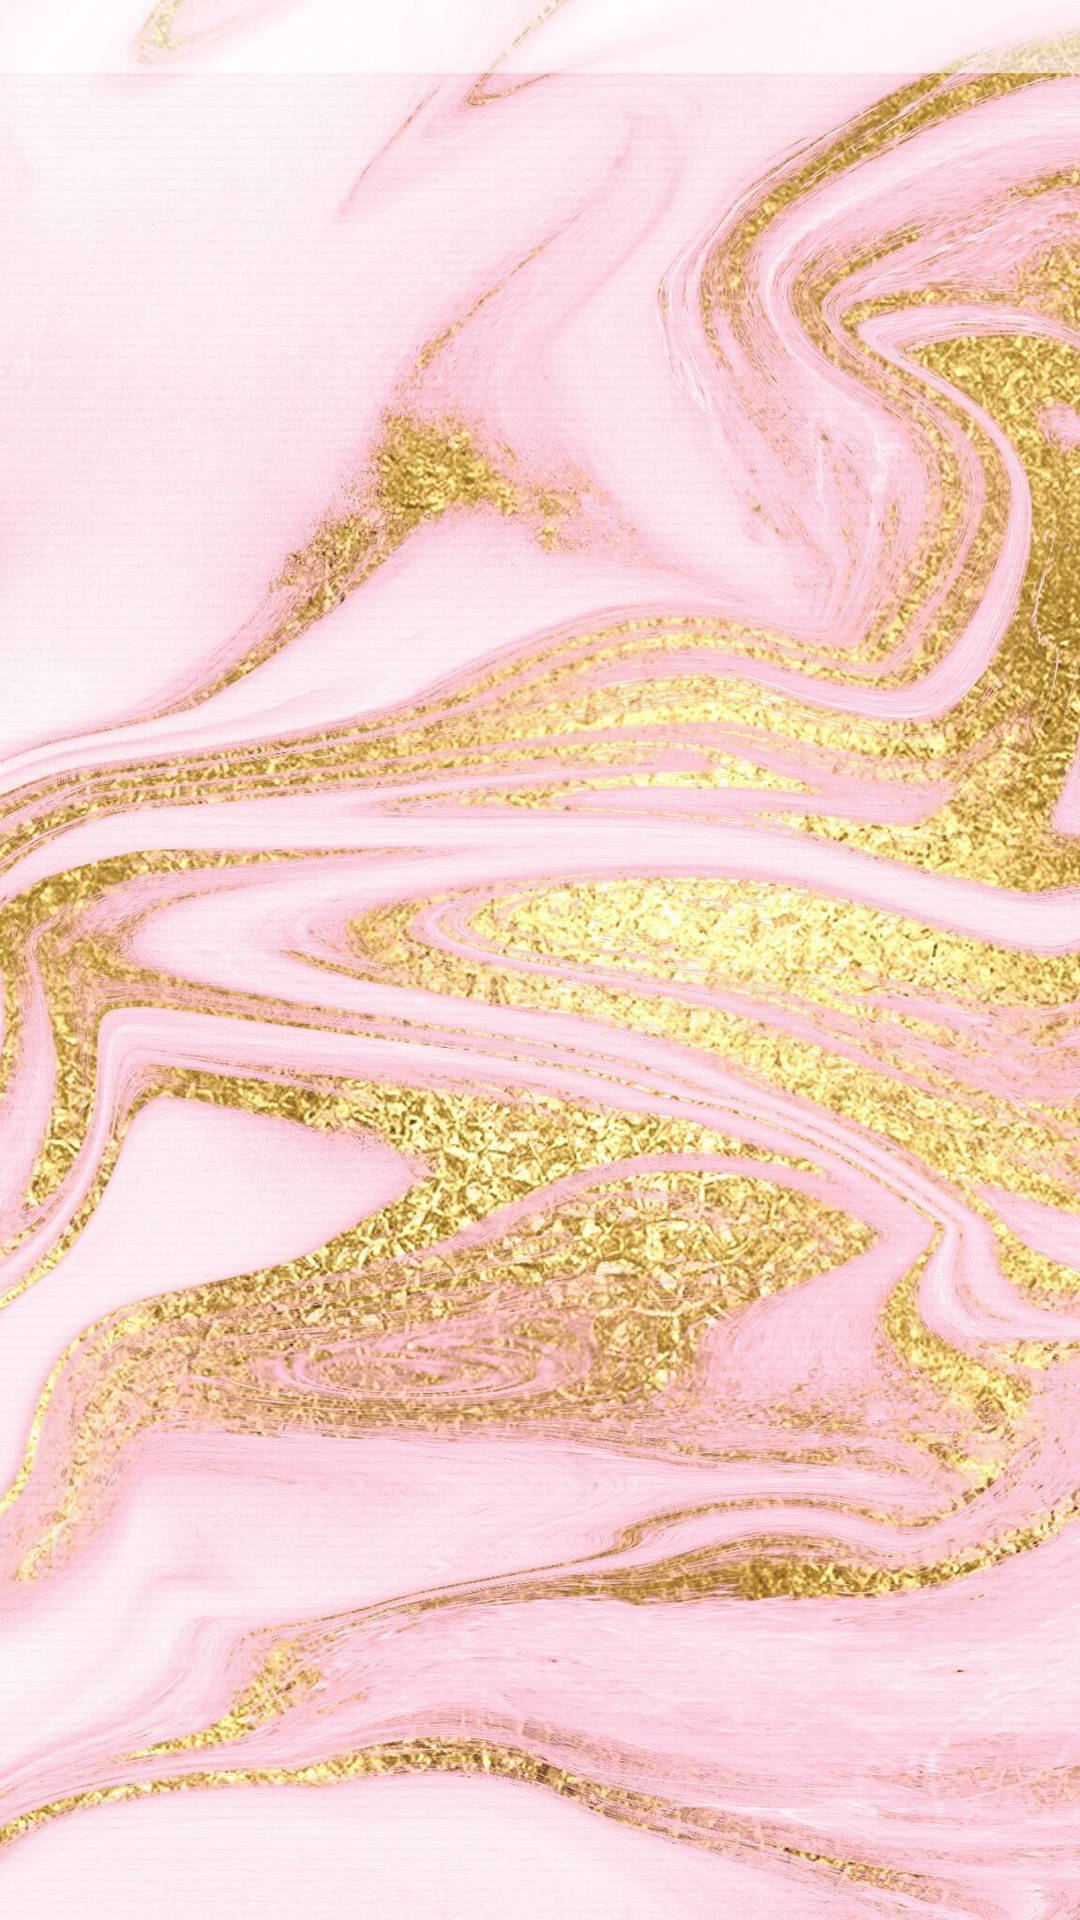 Marble Glazed Rose Gold Iphone Background